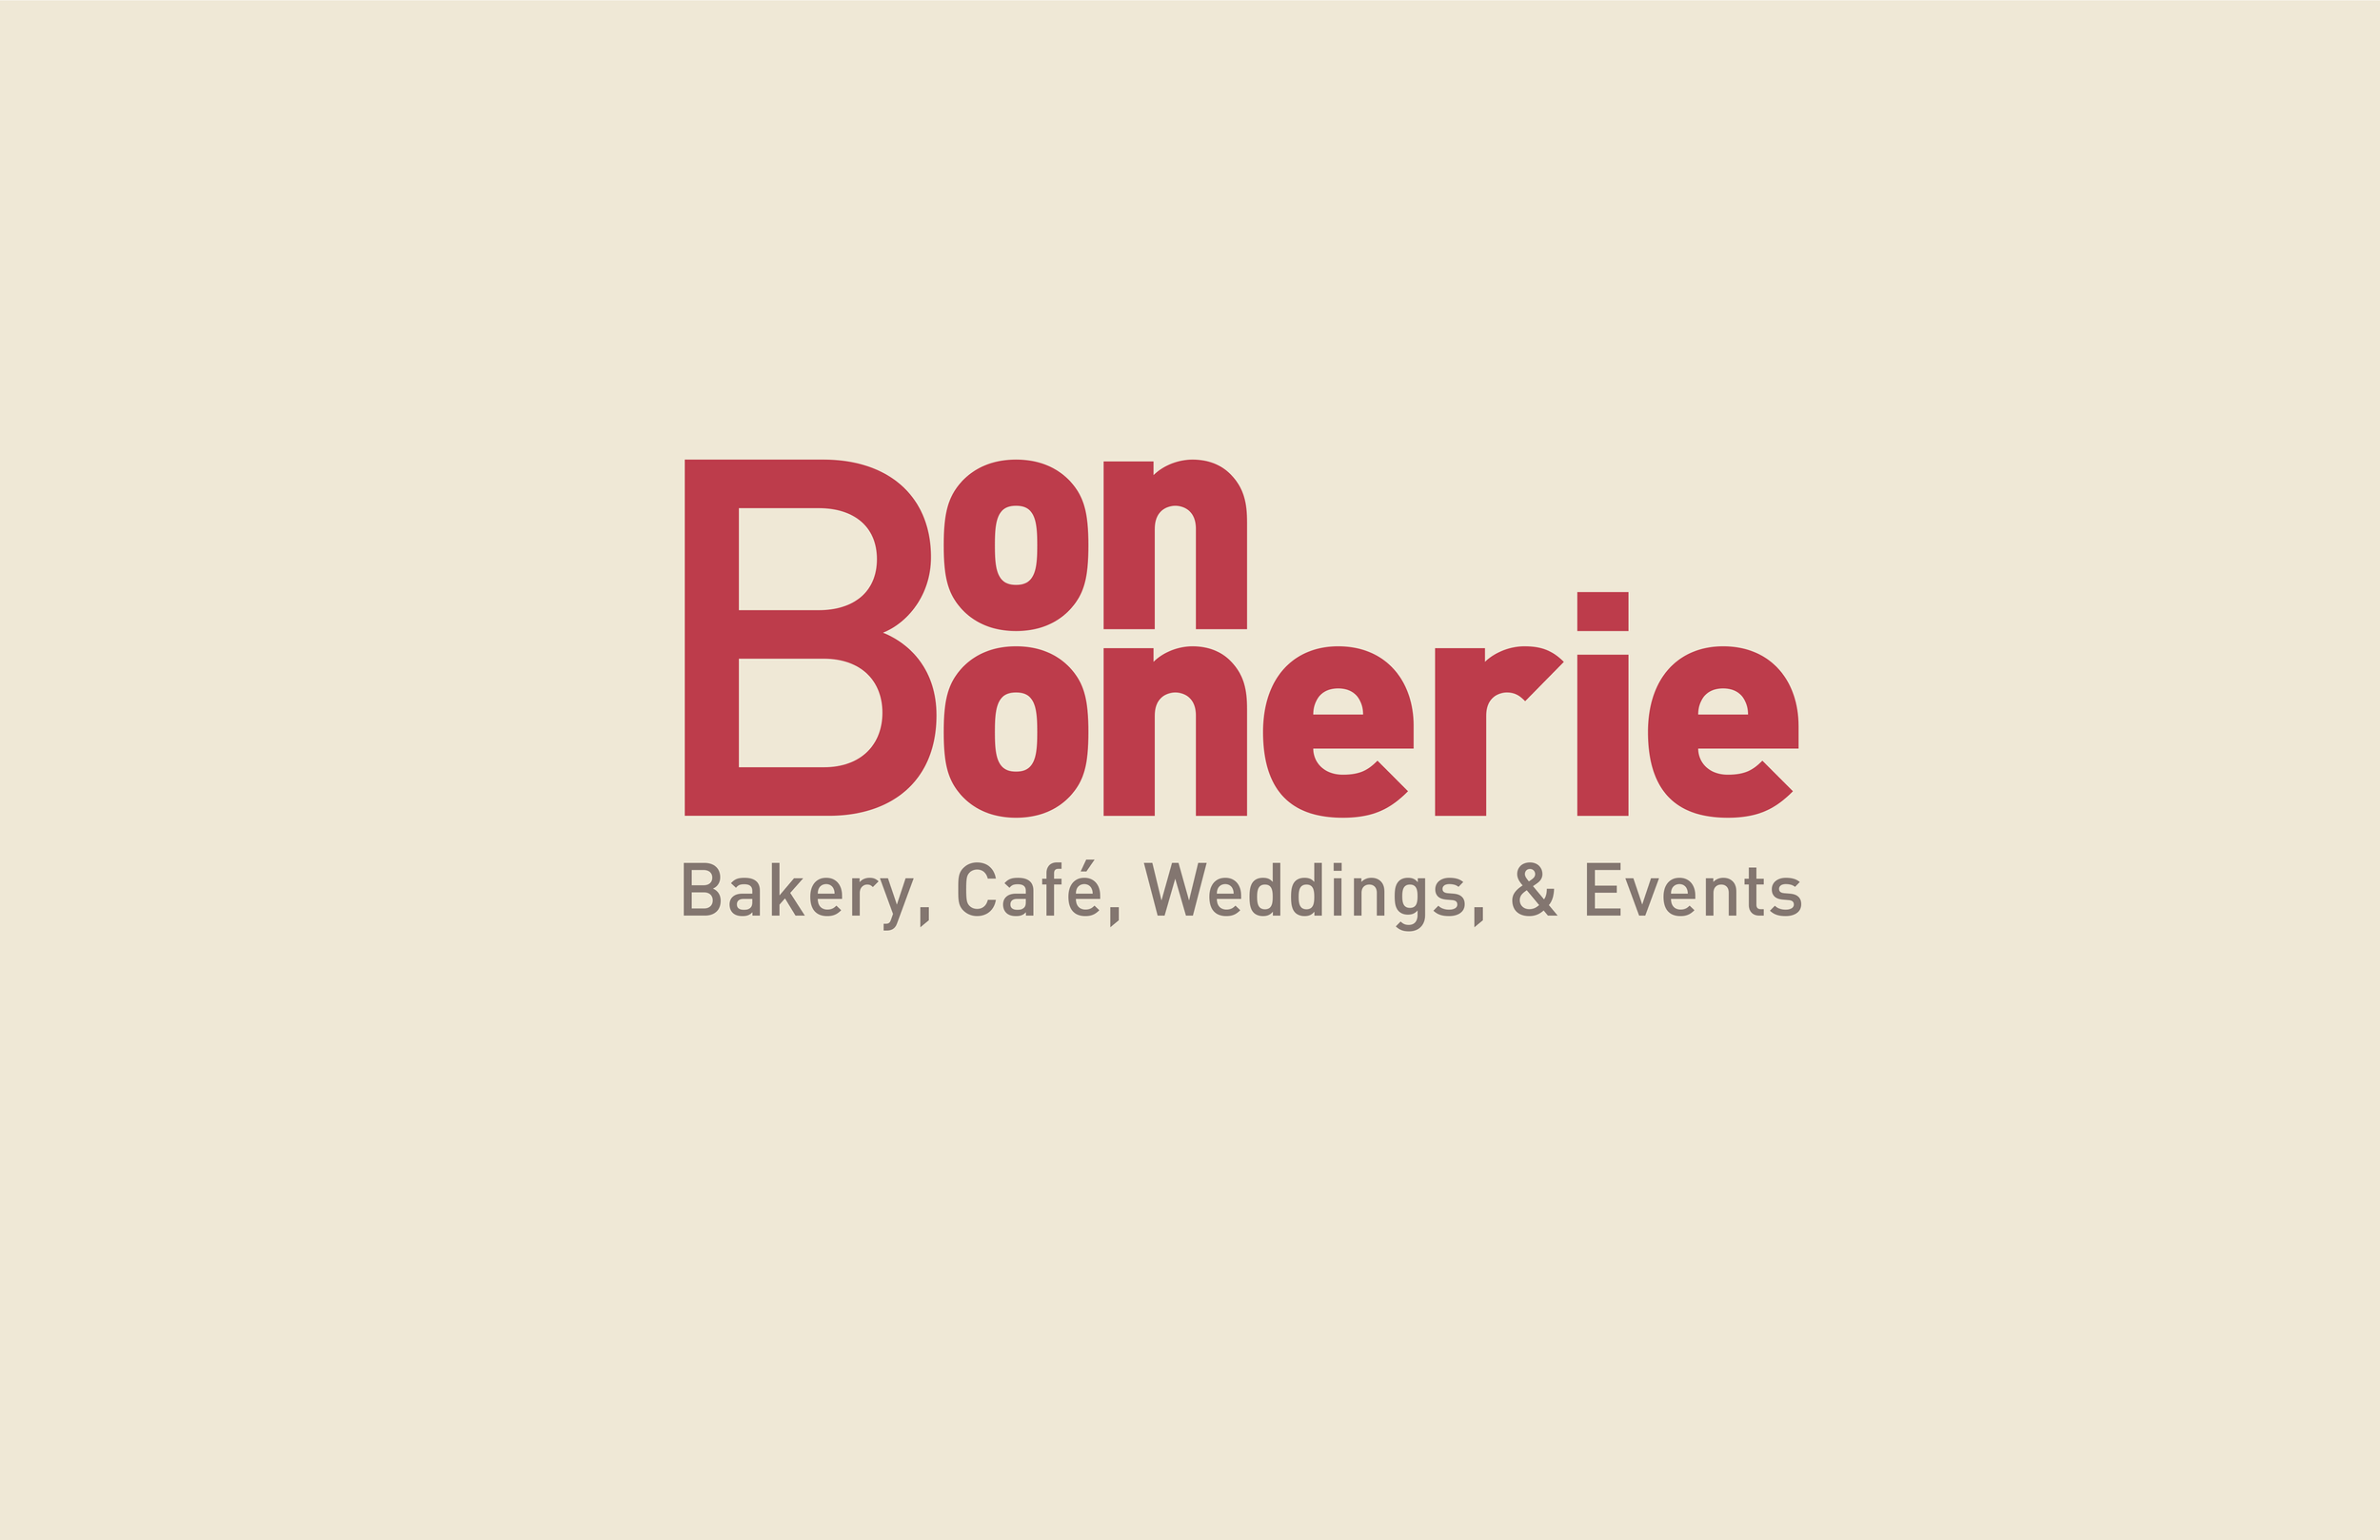 BonBonerie_01.png